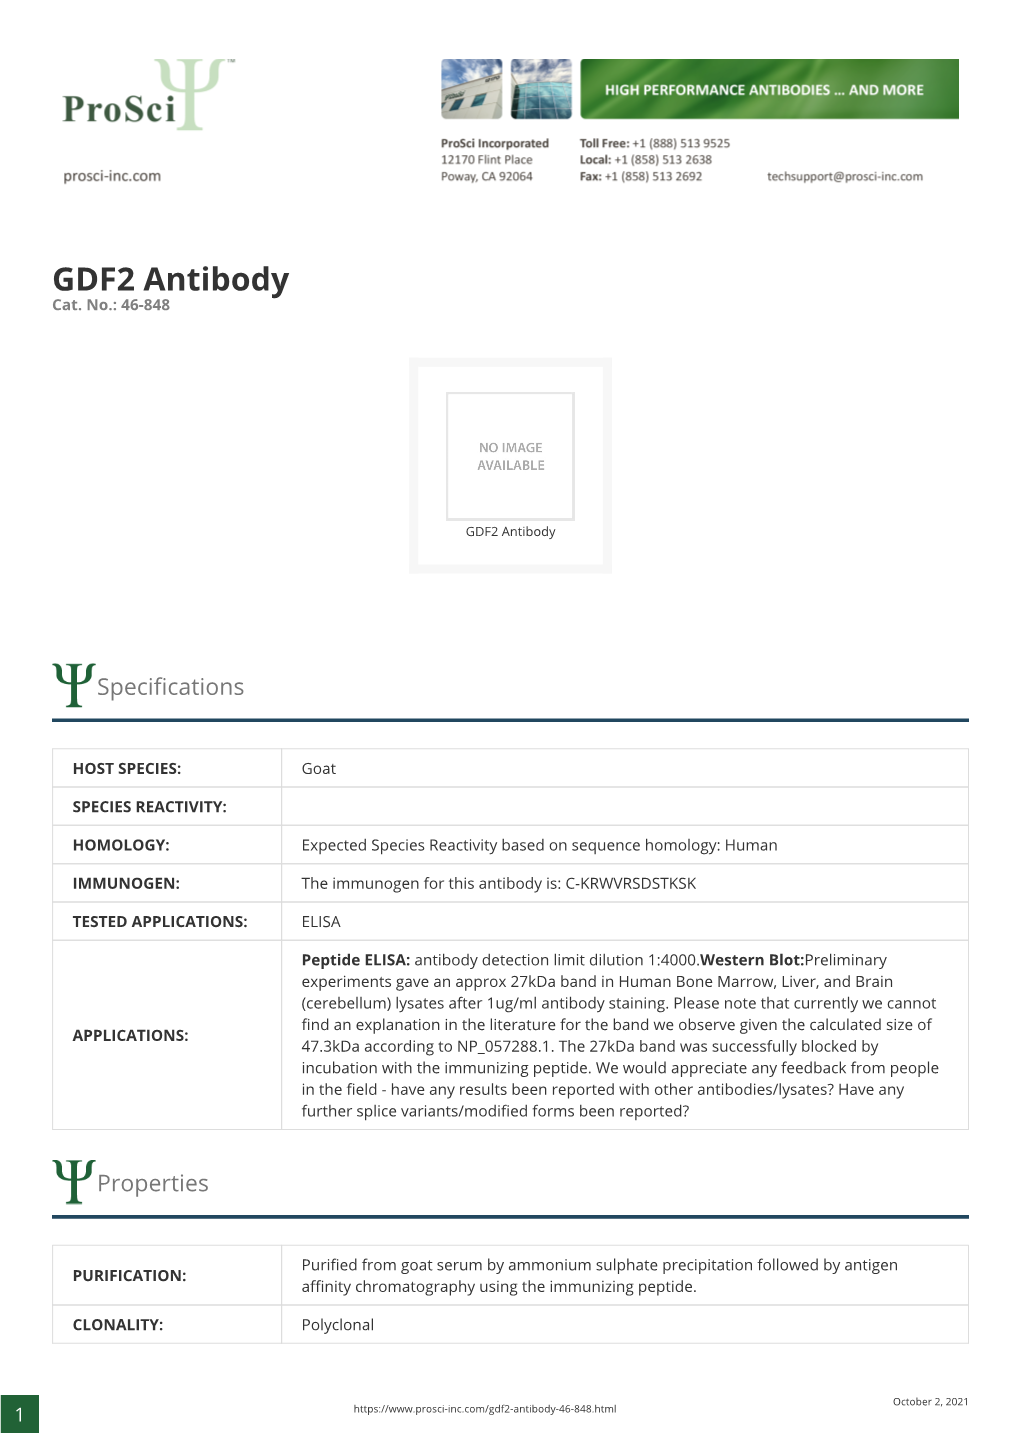 GDF2 Antibody Cat